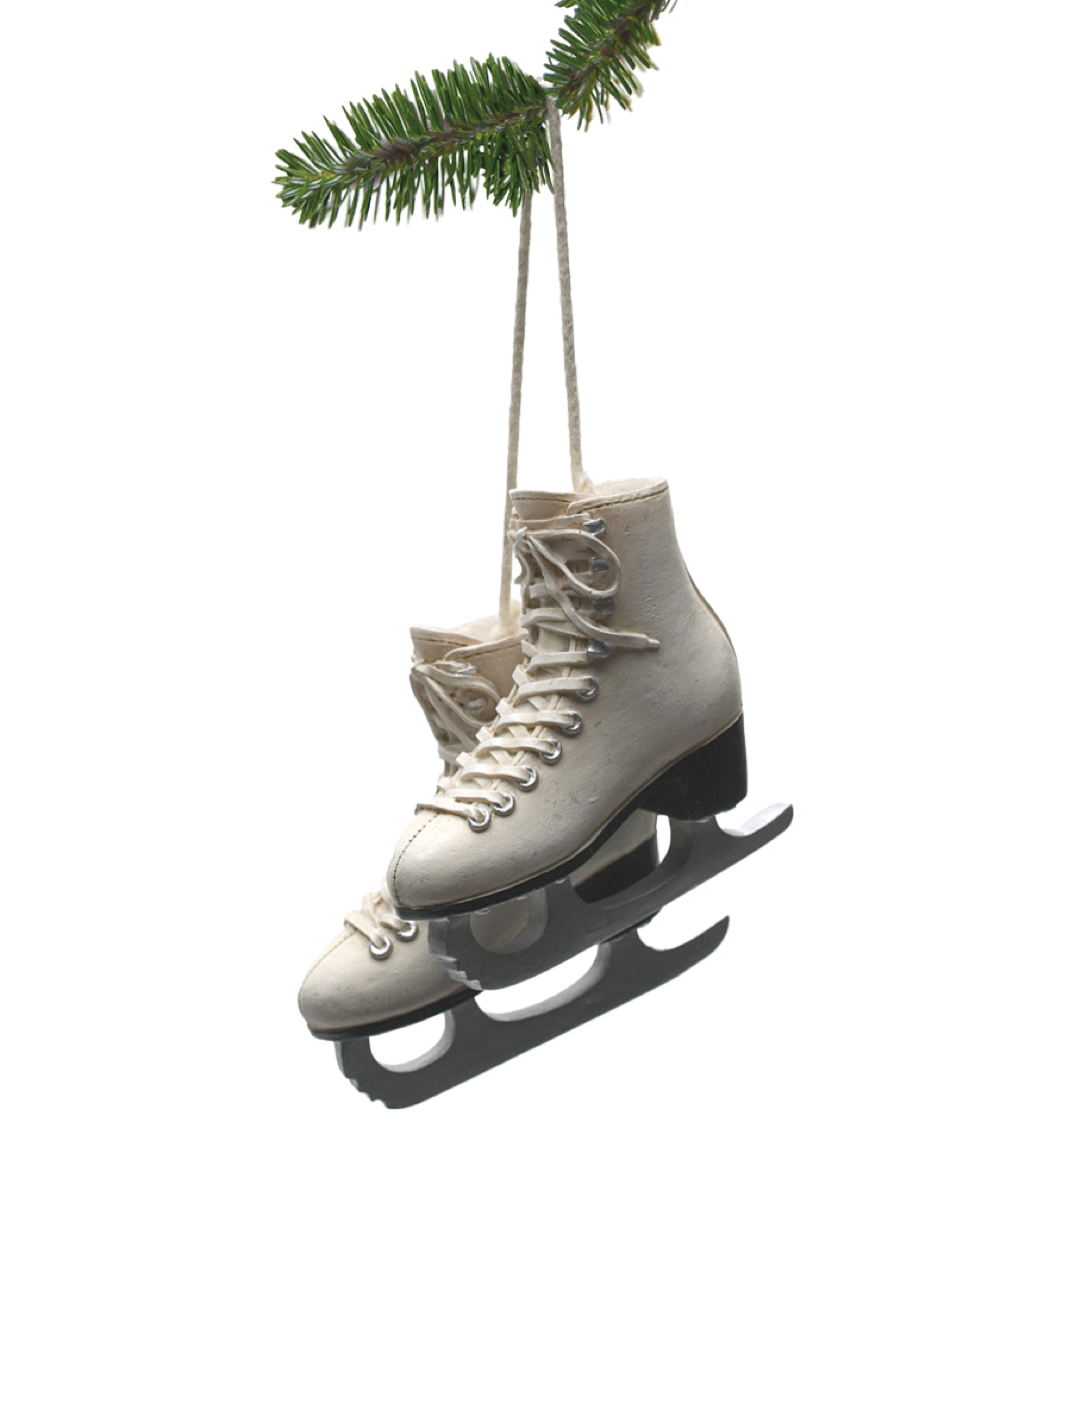 Figure Ice Skates Christmas Ornament